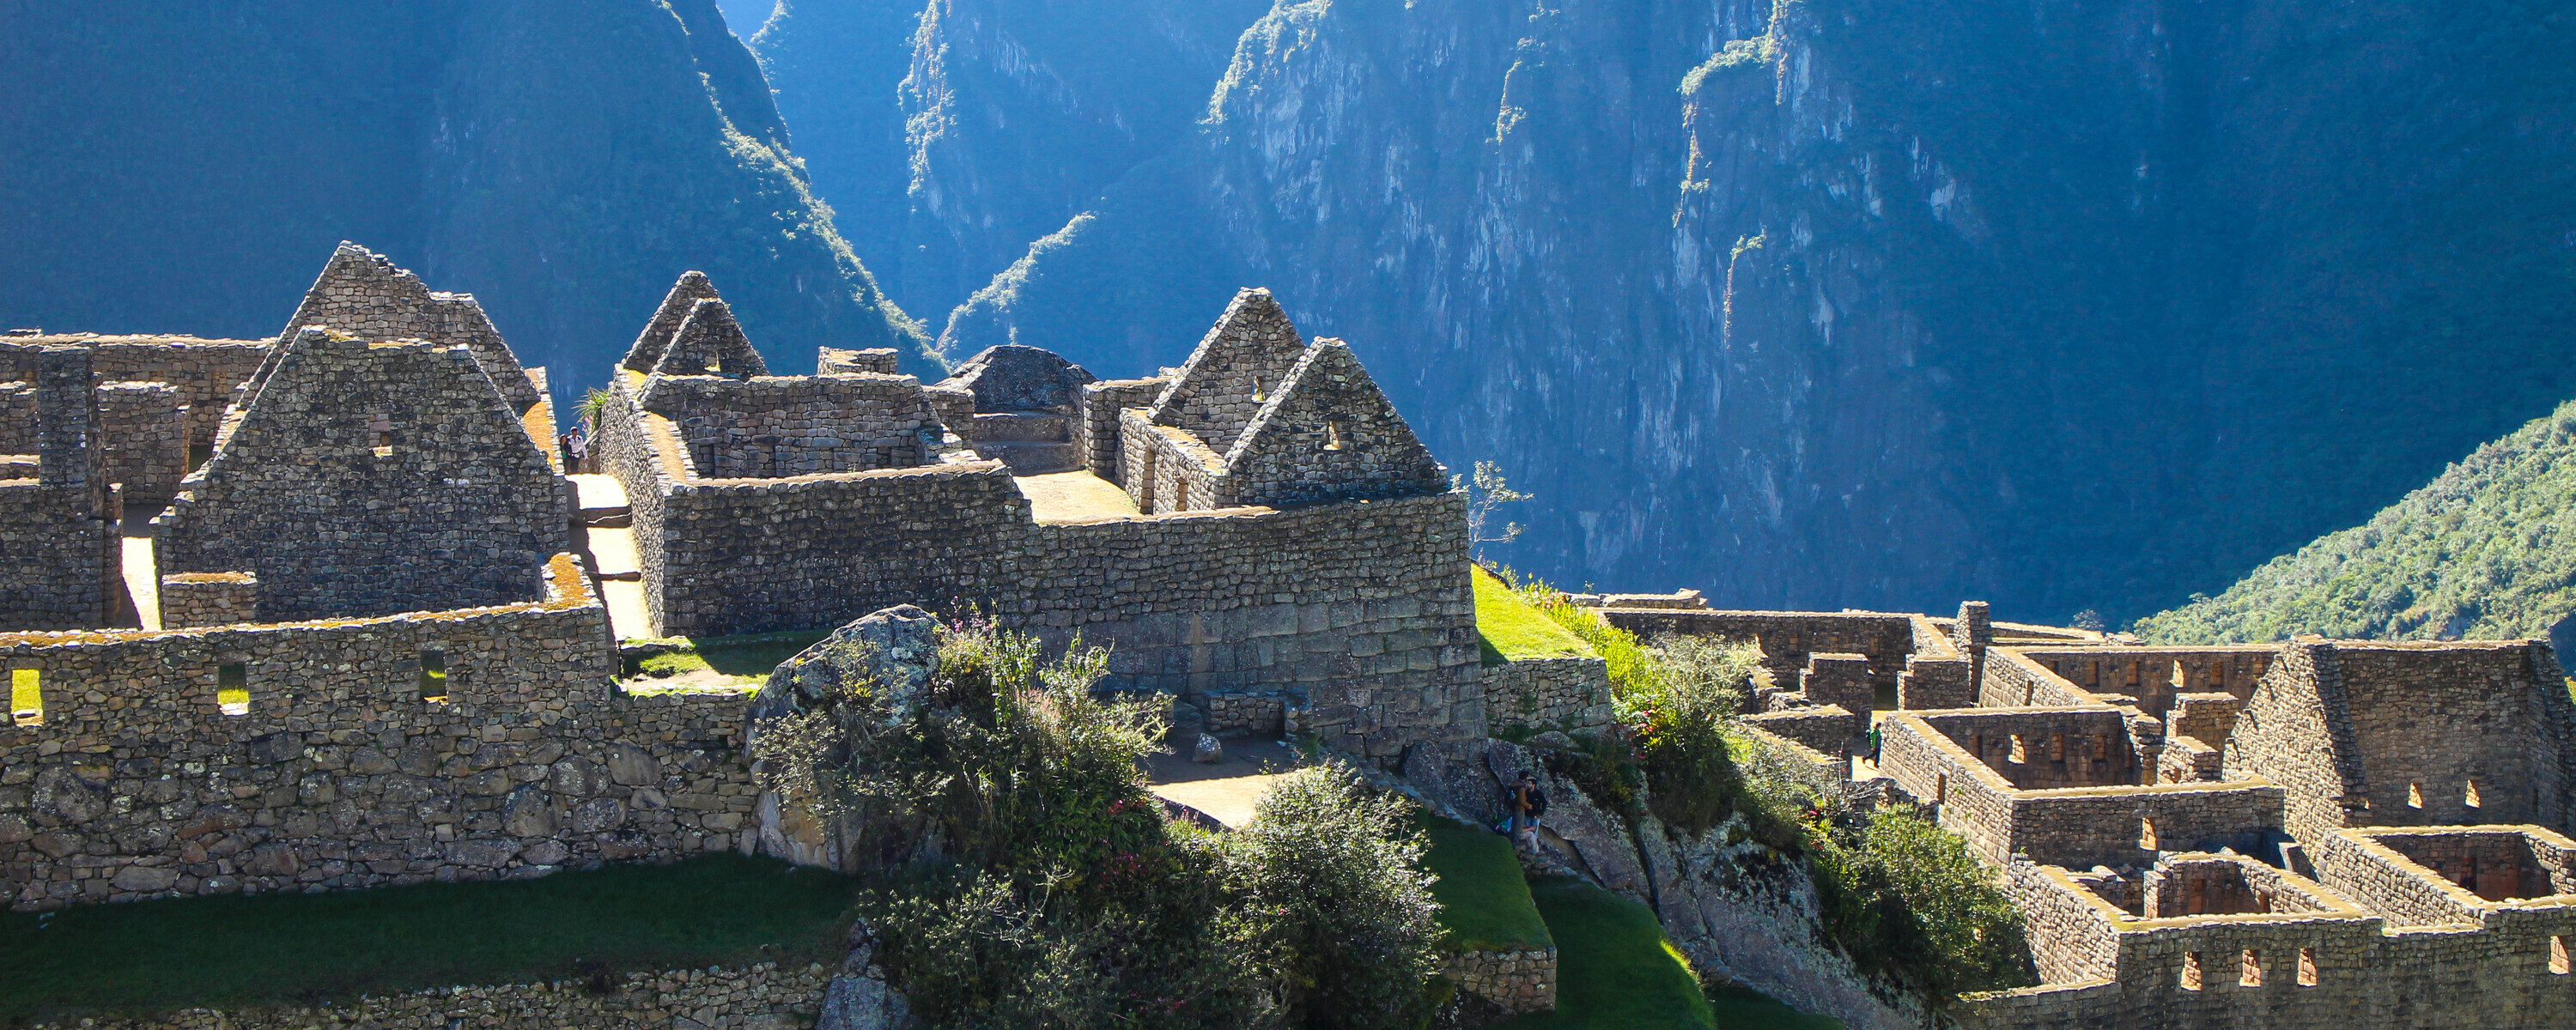 Machu Picchu er en imponerende og velbevart ruinby som ligger høyt oppe i Andesfjellene i Peru.